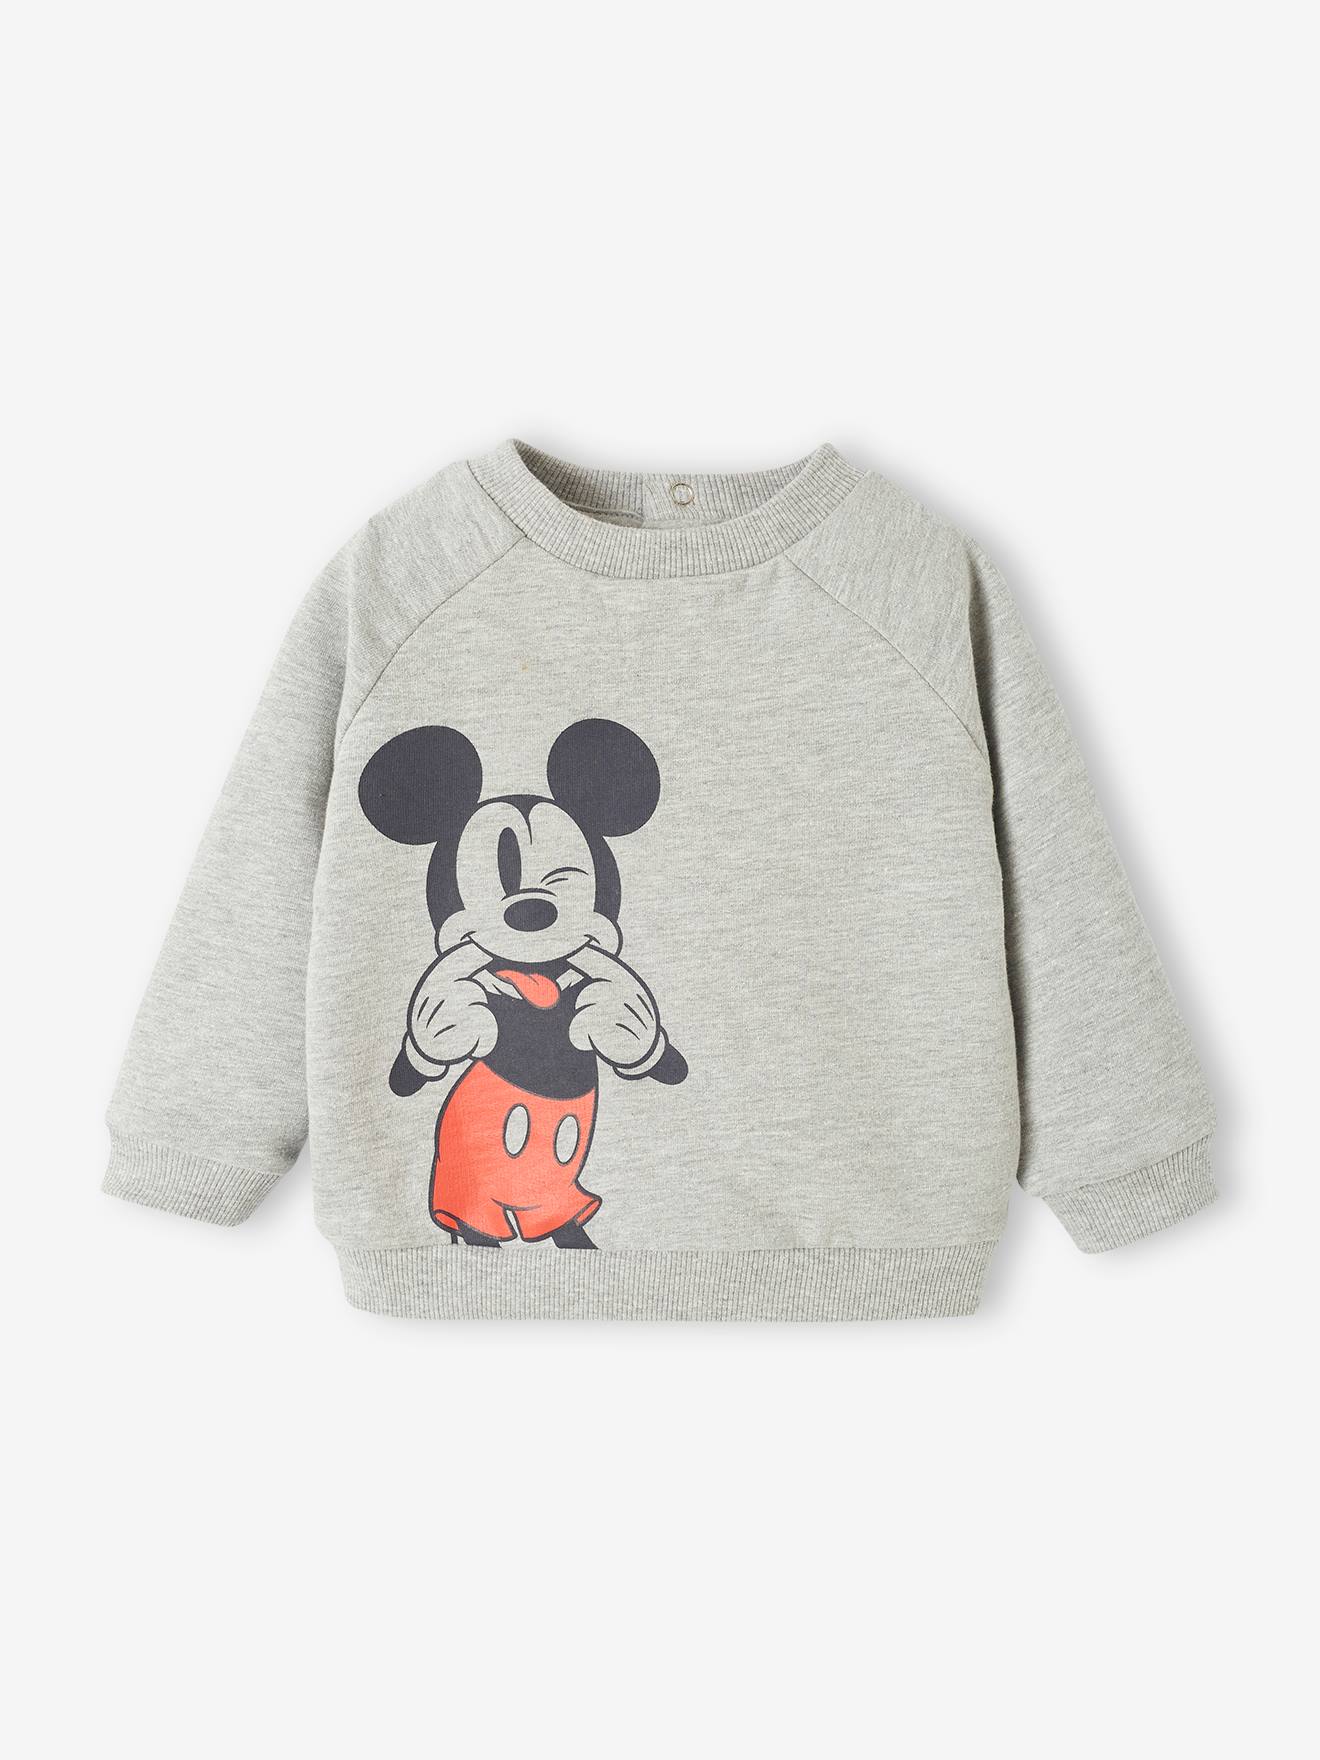 Sweatshirt for Babies, Disney(r) Mickey Mouse marl grey